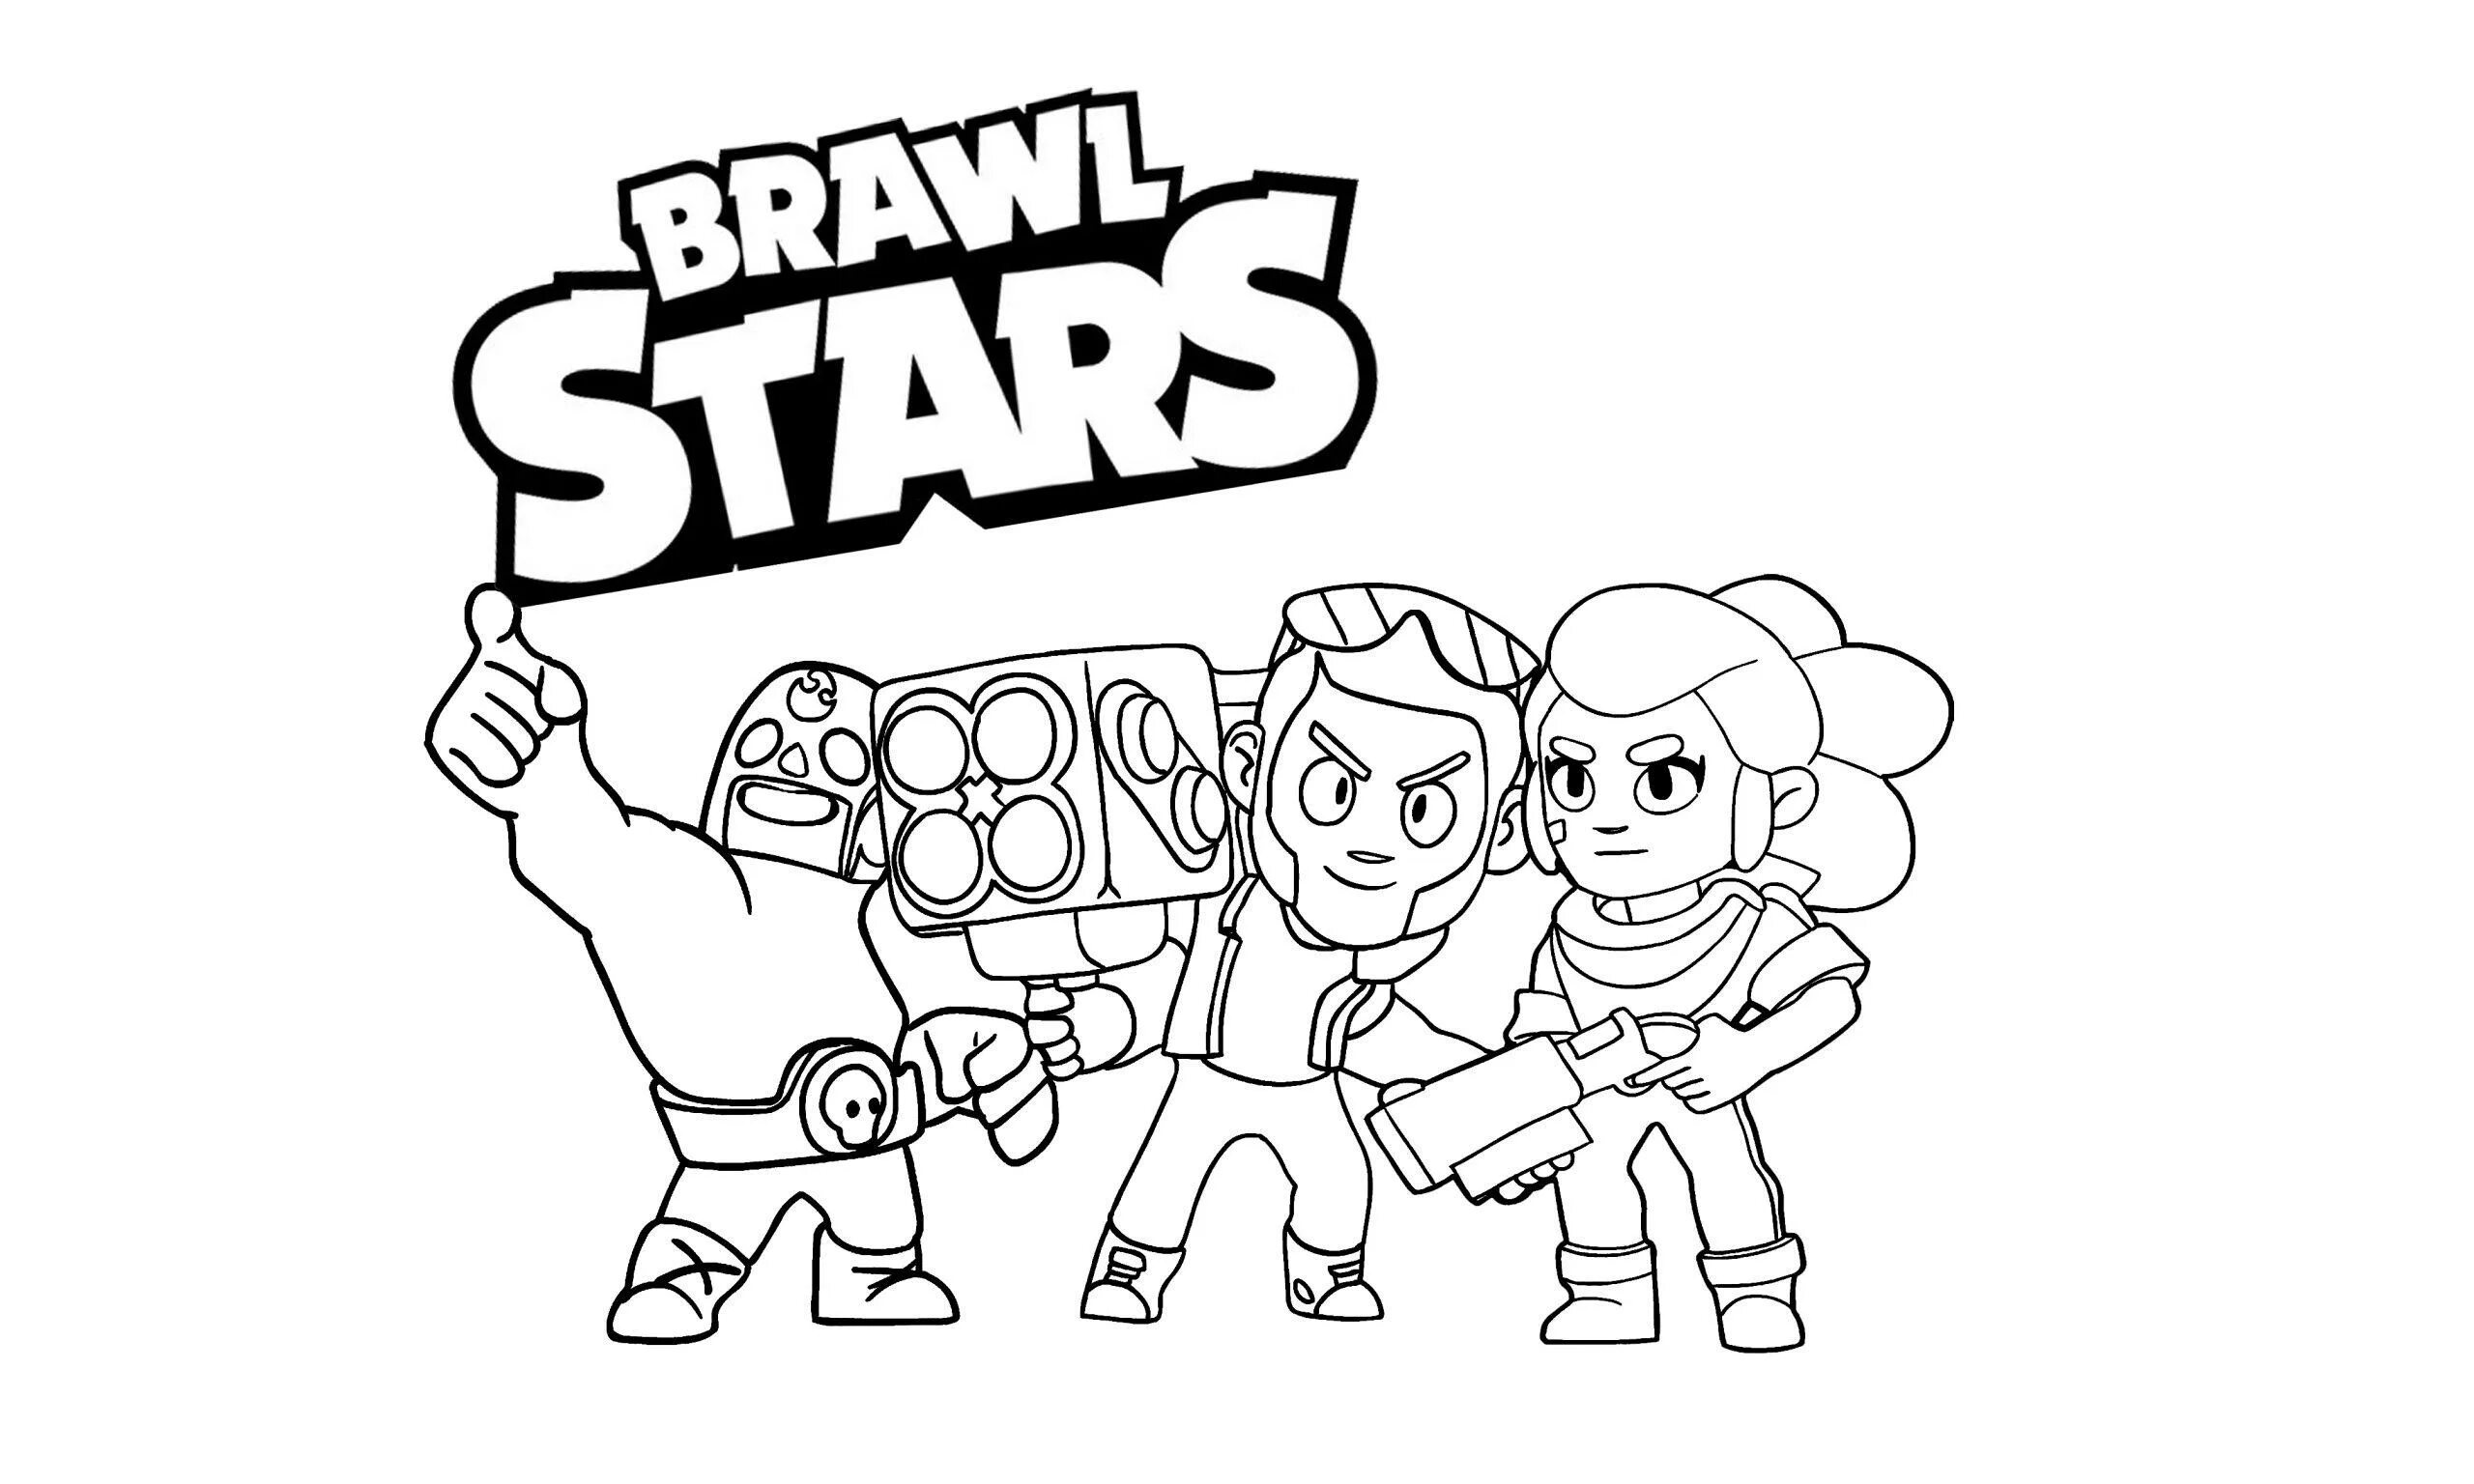 Bravo stars print #2